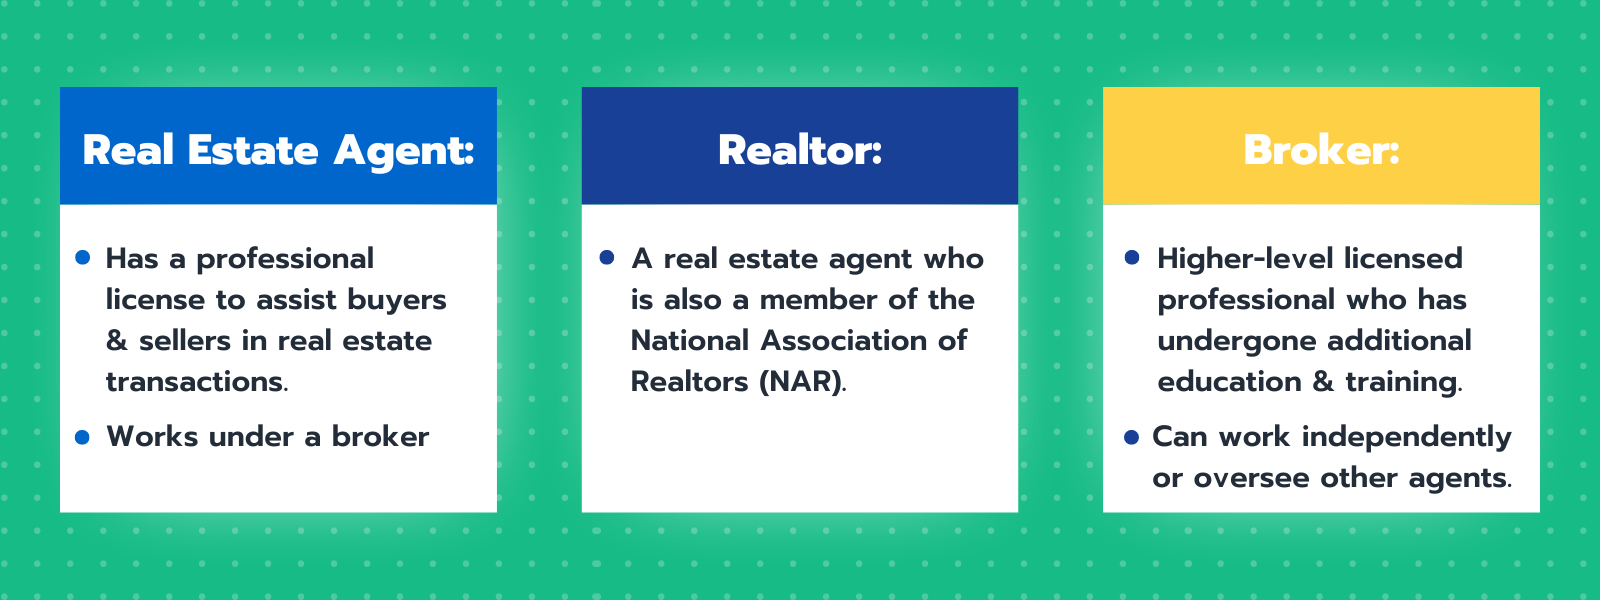 Real Estate Agent vs. Realtor vs. Broker